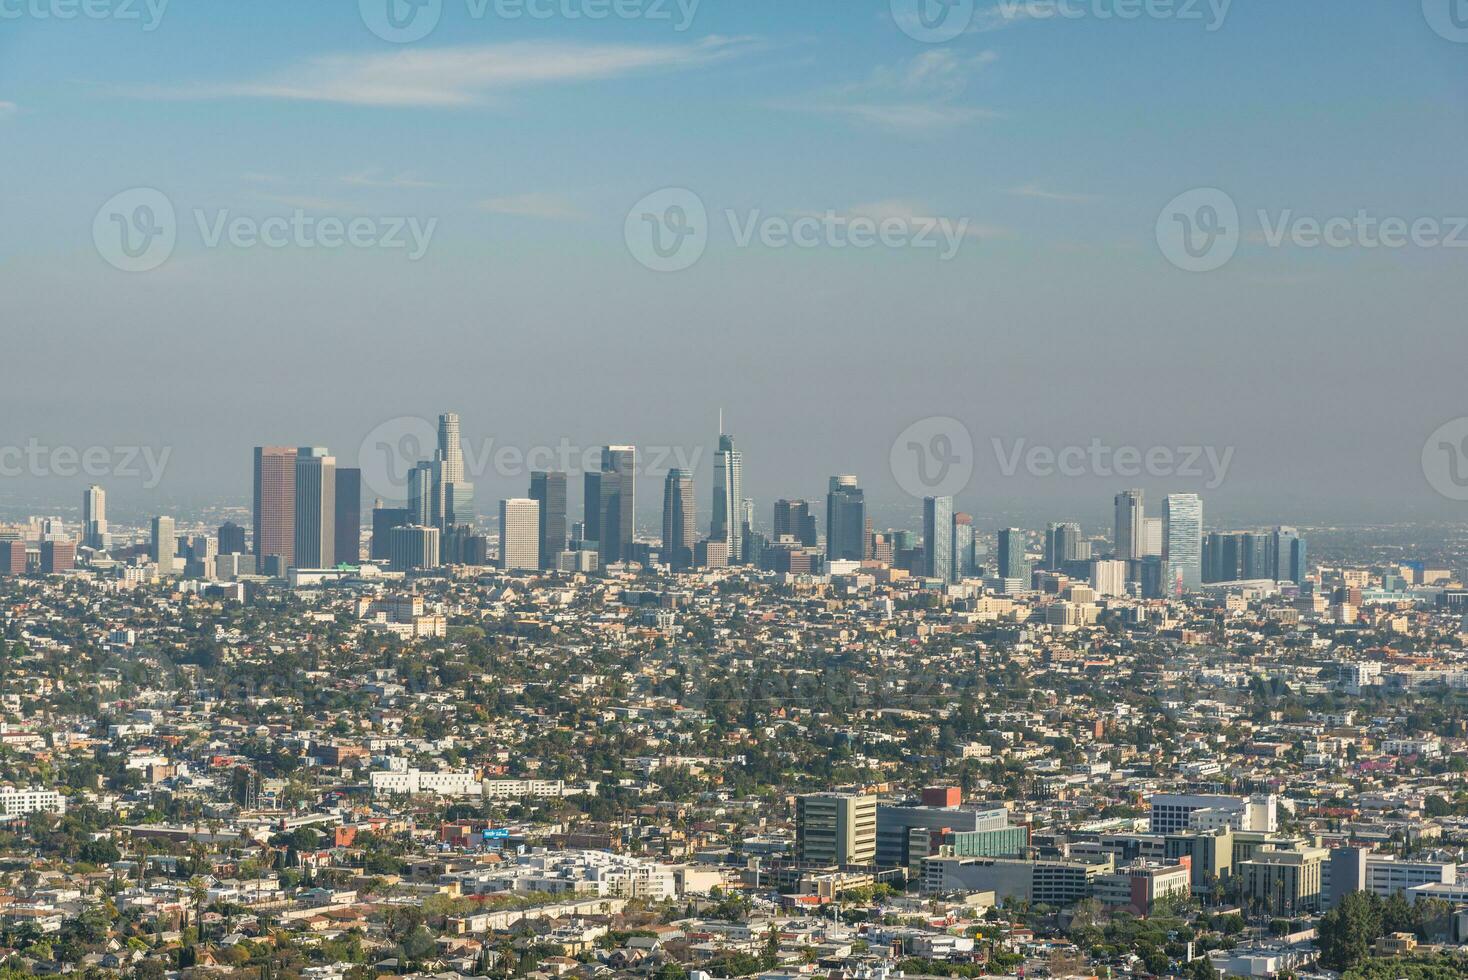 Los Angeles skyline on a sunny day photo